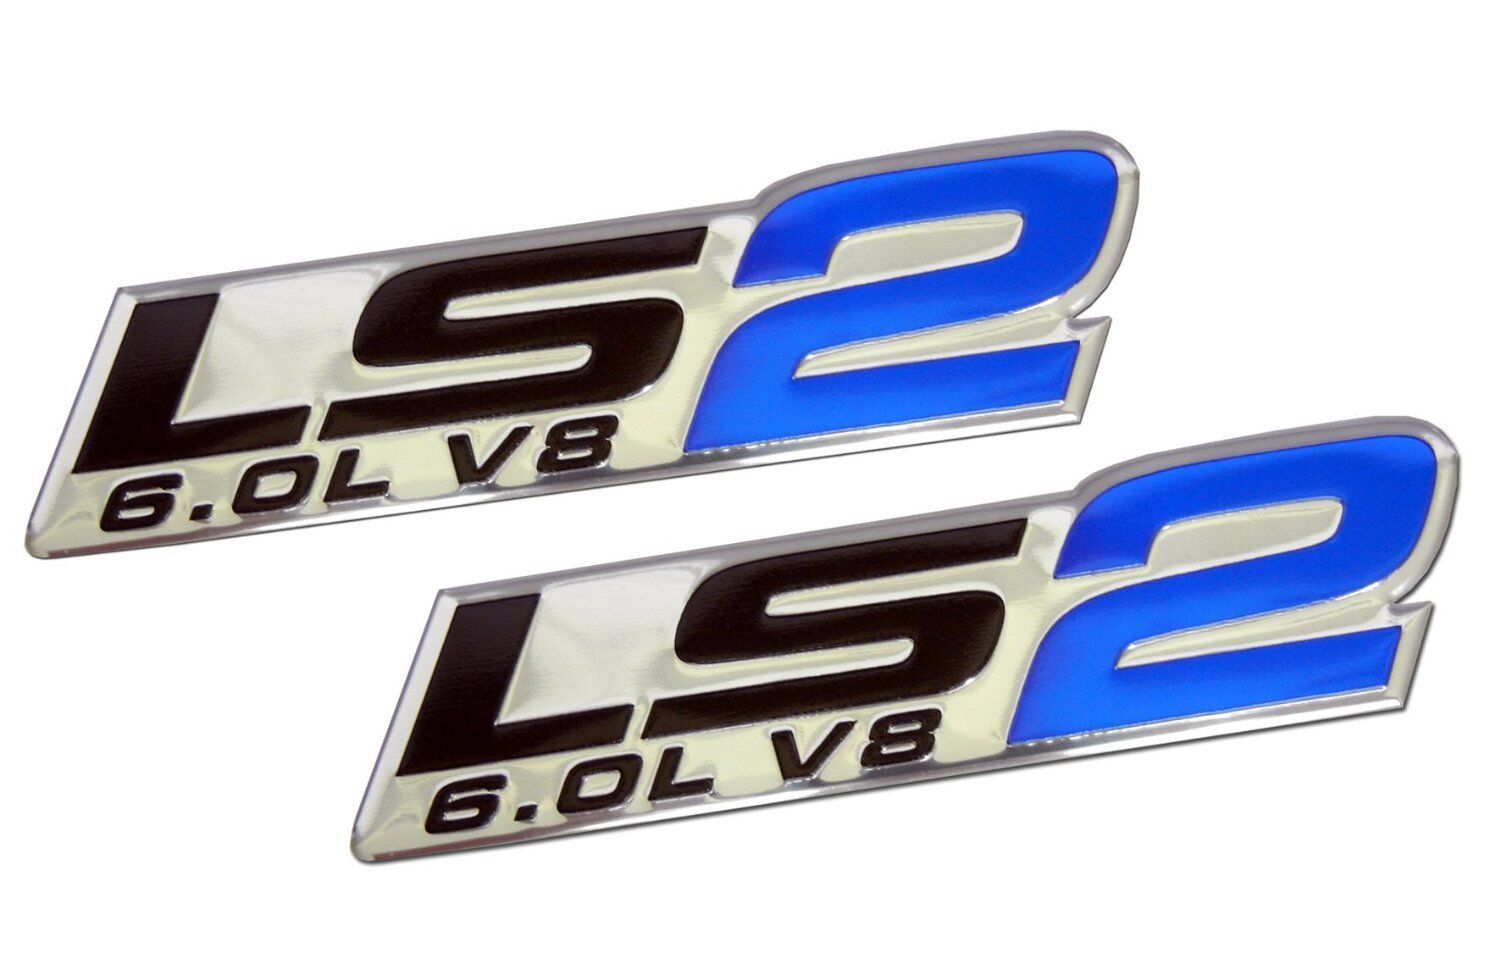 2x GM CHEVY CHEVROLET LS2 6.0L V8 ENGINE EMBLEMS BADGE CHROME SILVER PAIR Blue F